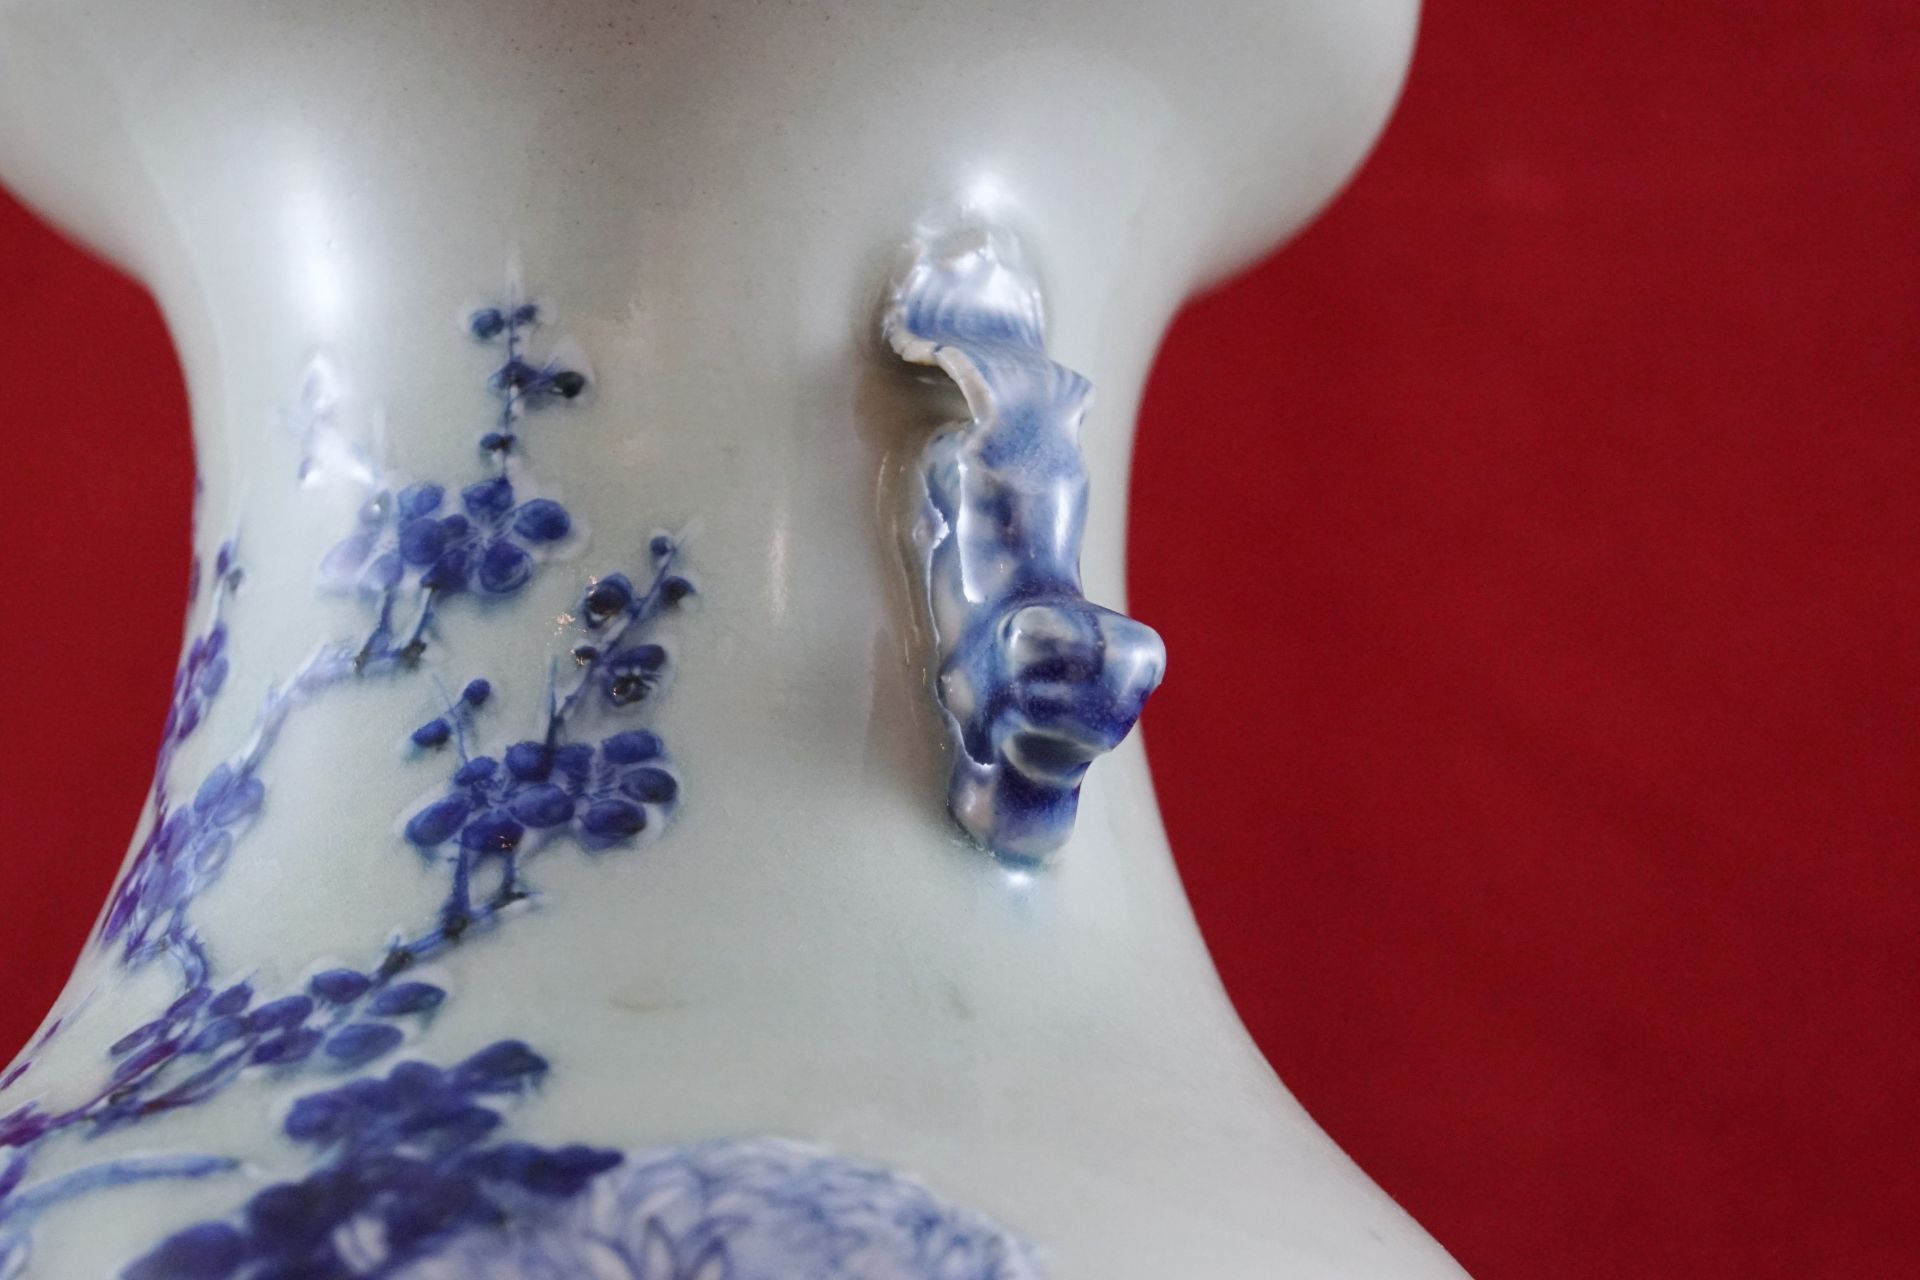 Rouleau Vase, China Porzellan, seladonfarben mit blauen erhabenen Blumenmotiven, 19. Jhrd, Höhe 33,5 - Image 3 of 3